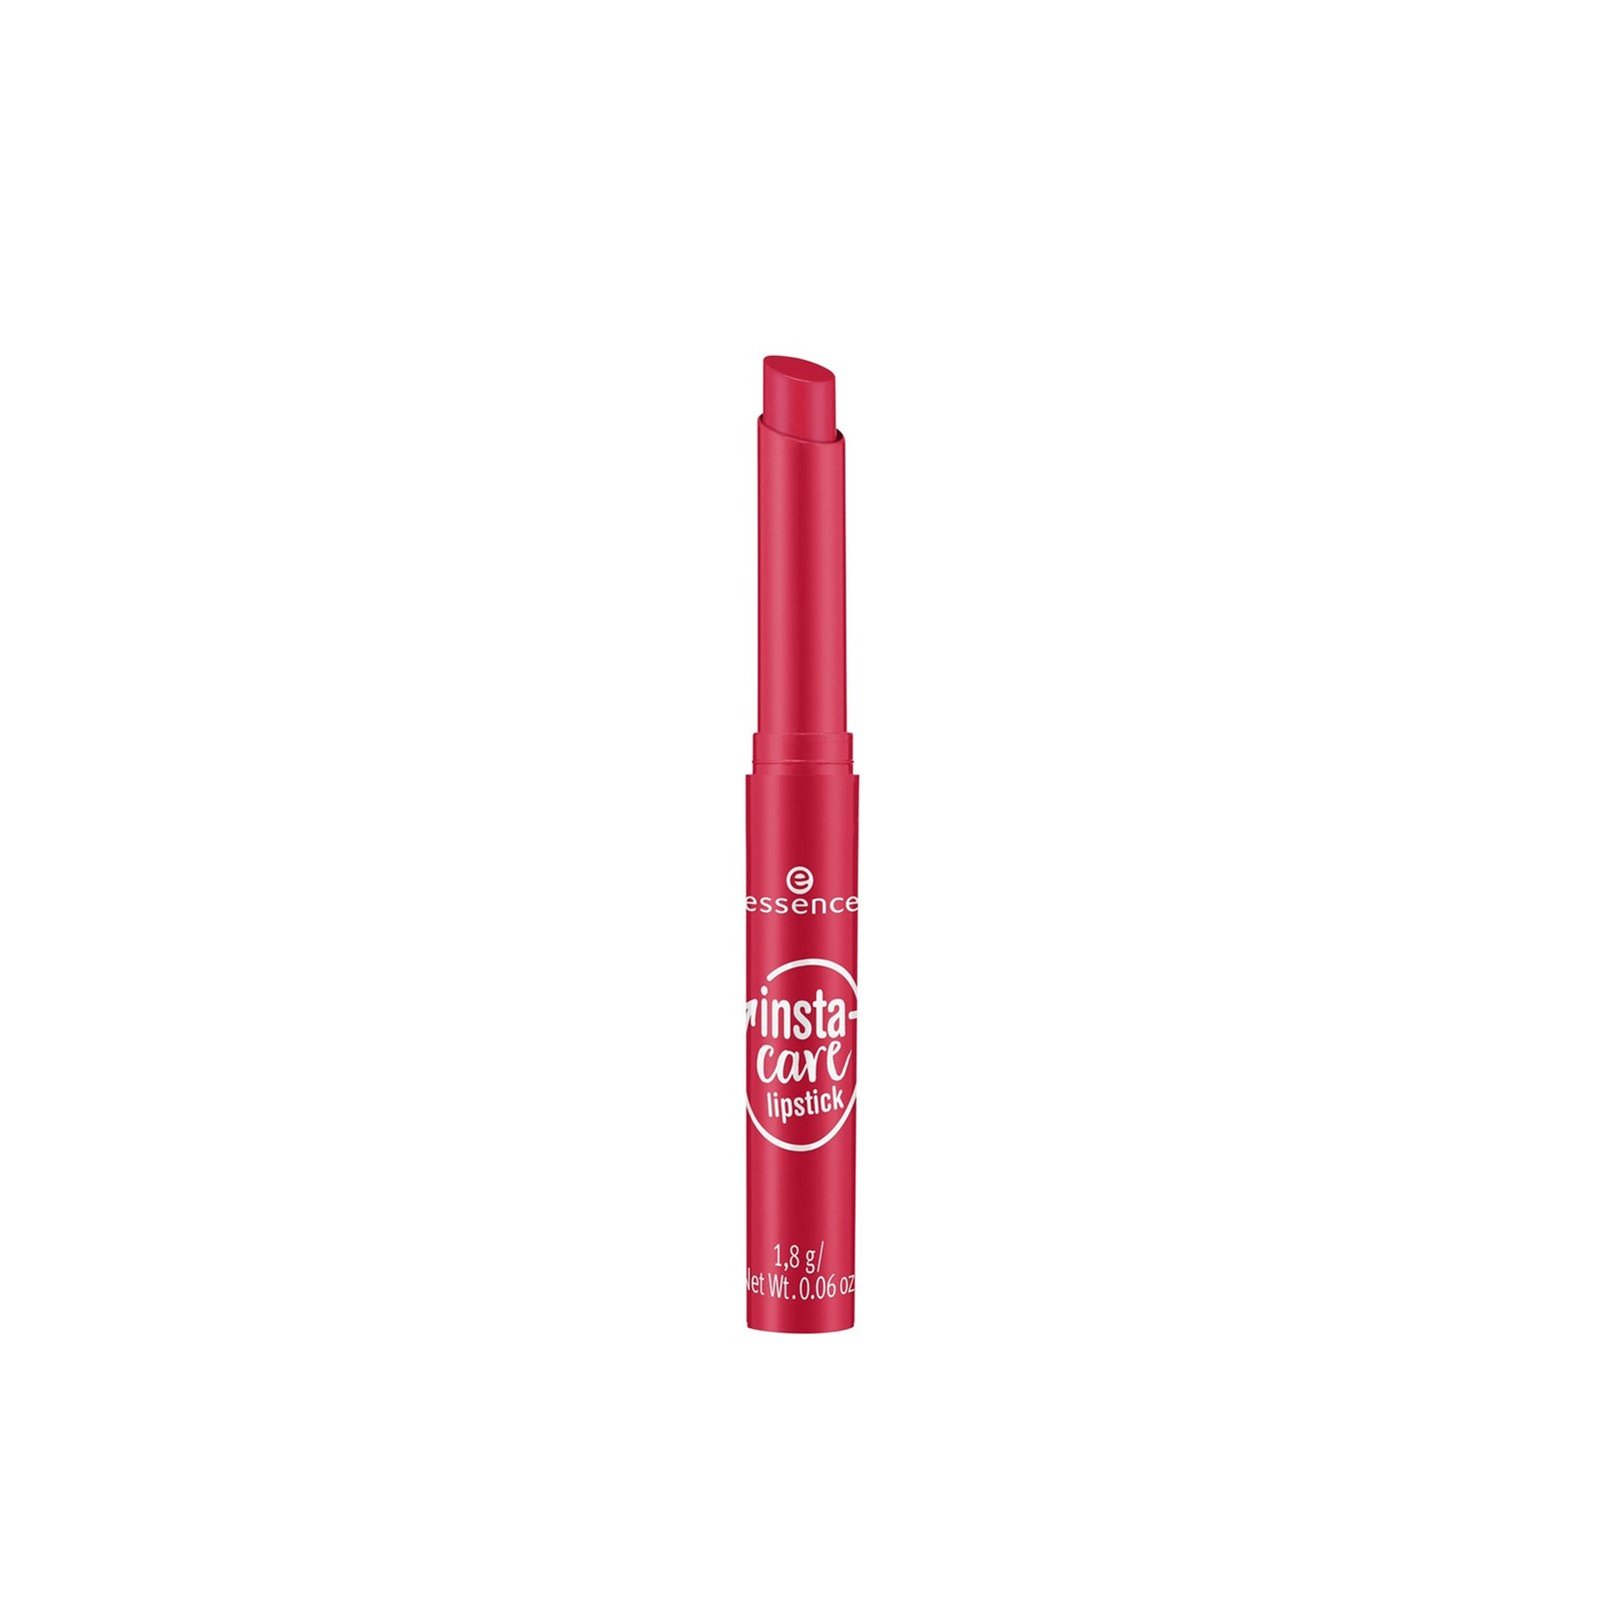 essence Insta-Care Lipstick 06 Romantic Doze 1.8g (0.06 oz)